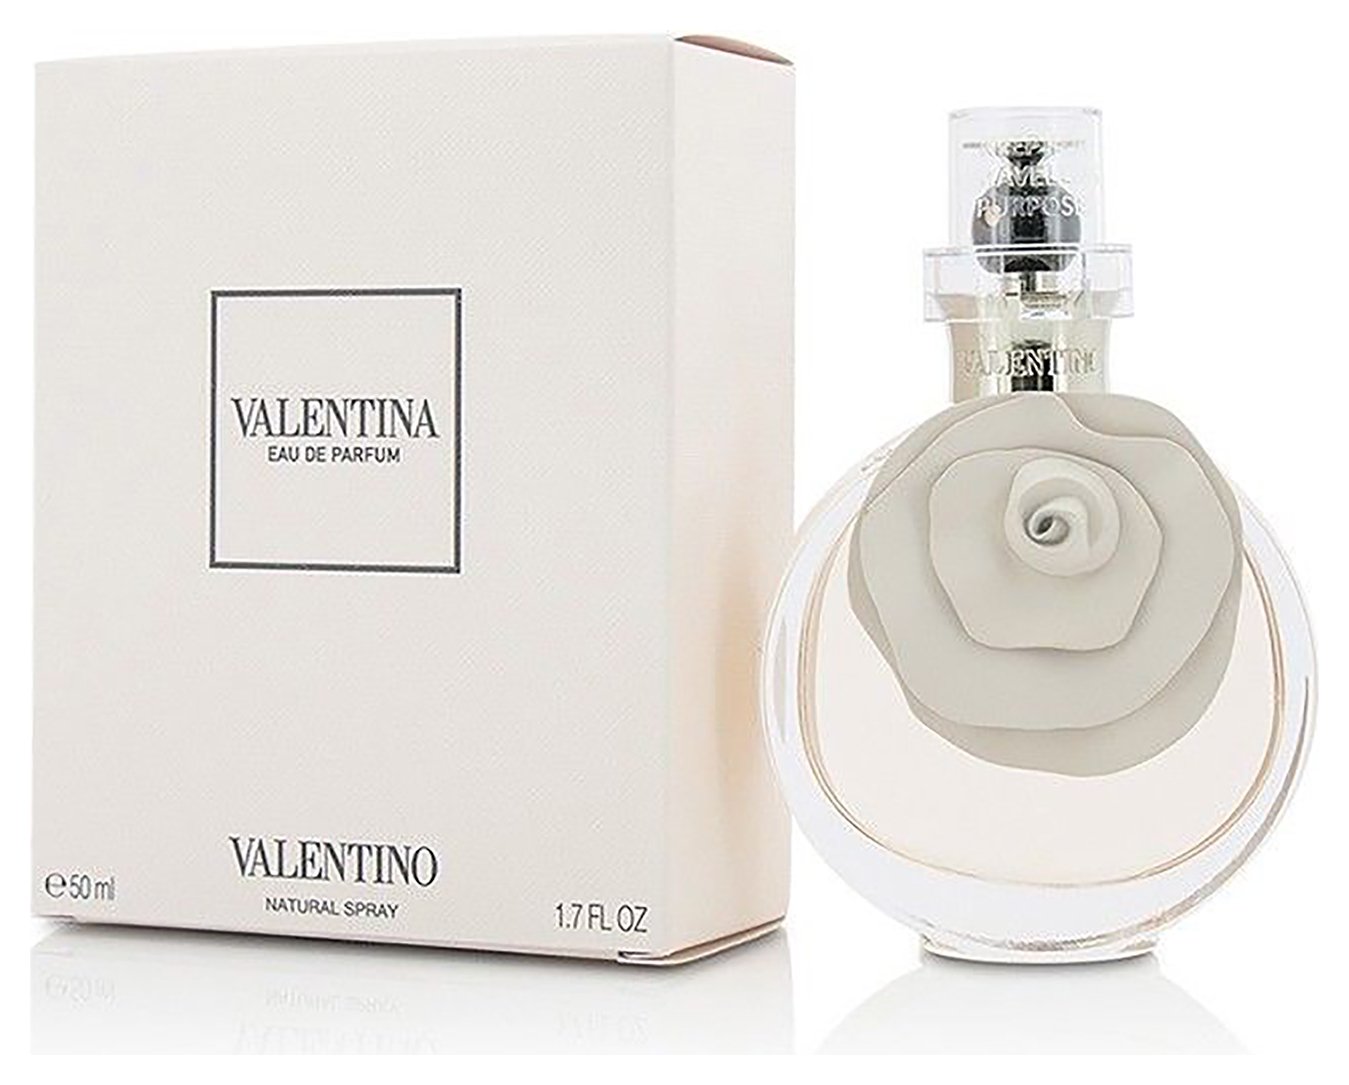 Valentino Valentina Eau de Parfum - 50ml